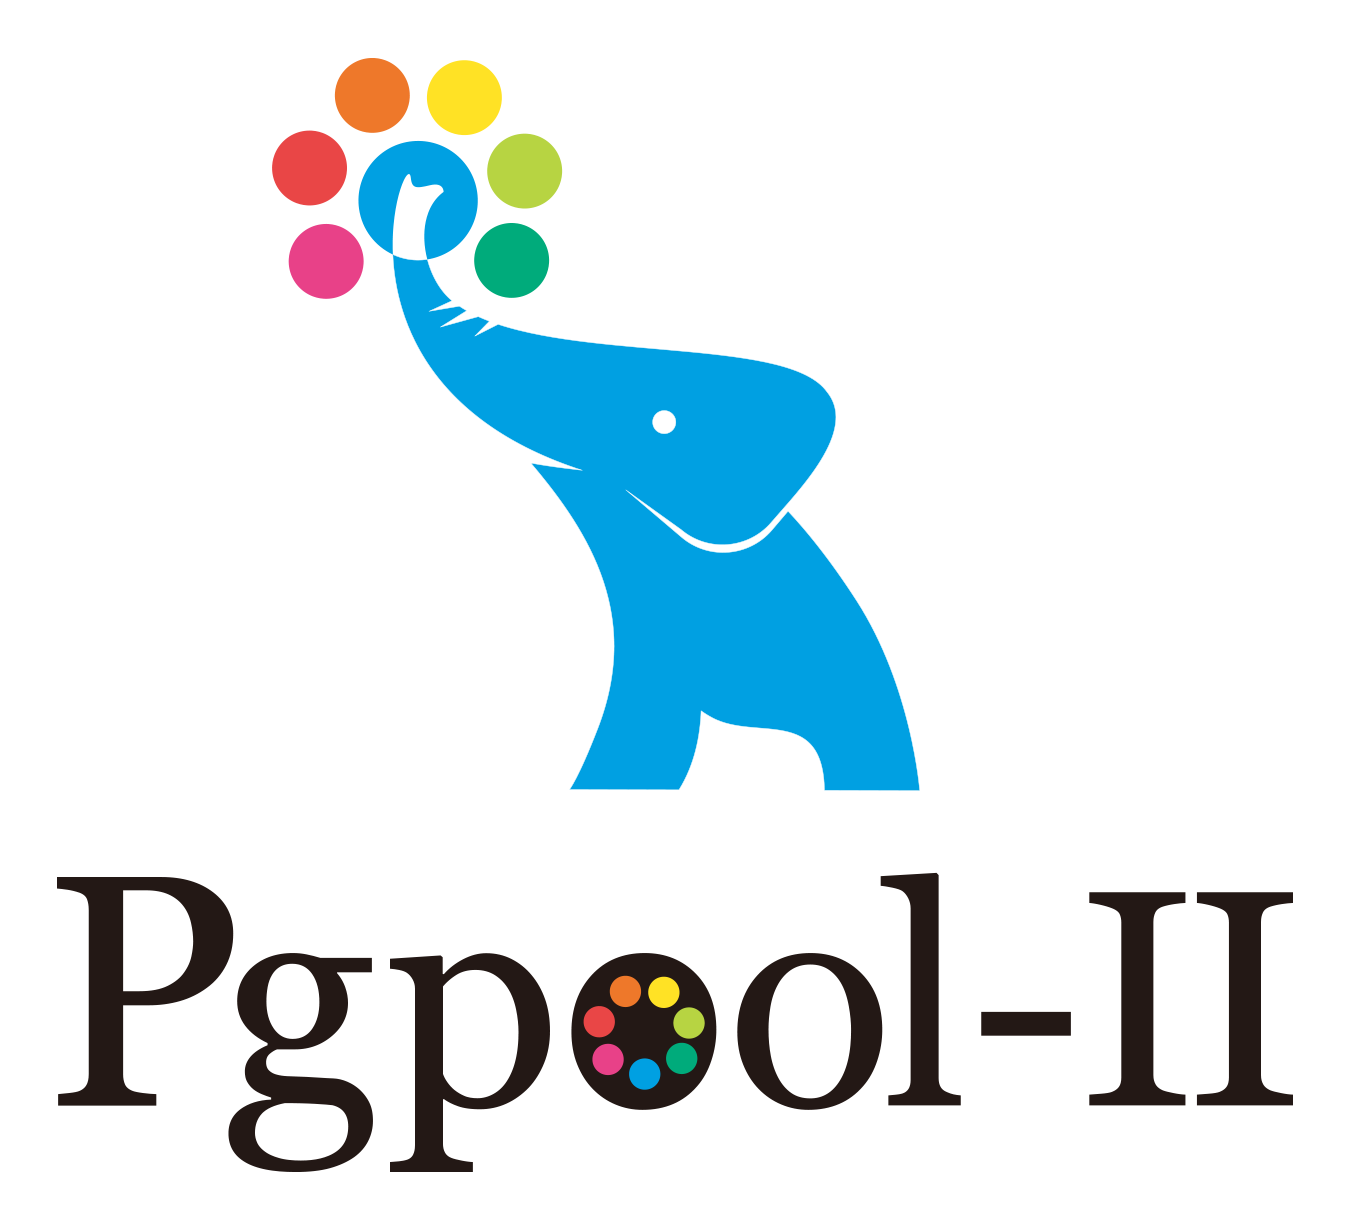 pgpool-II logo square 1361x1232.png